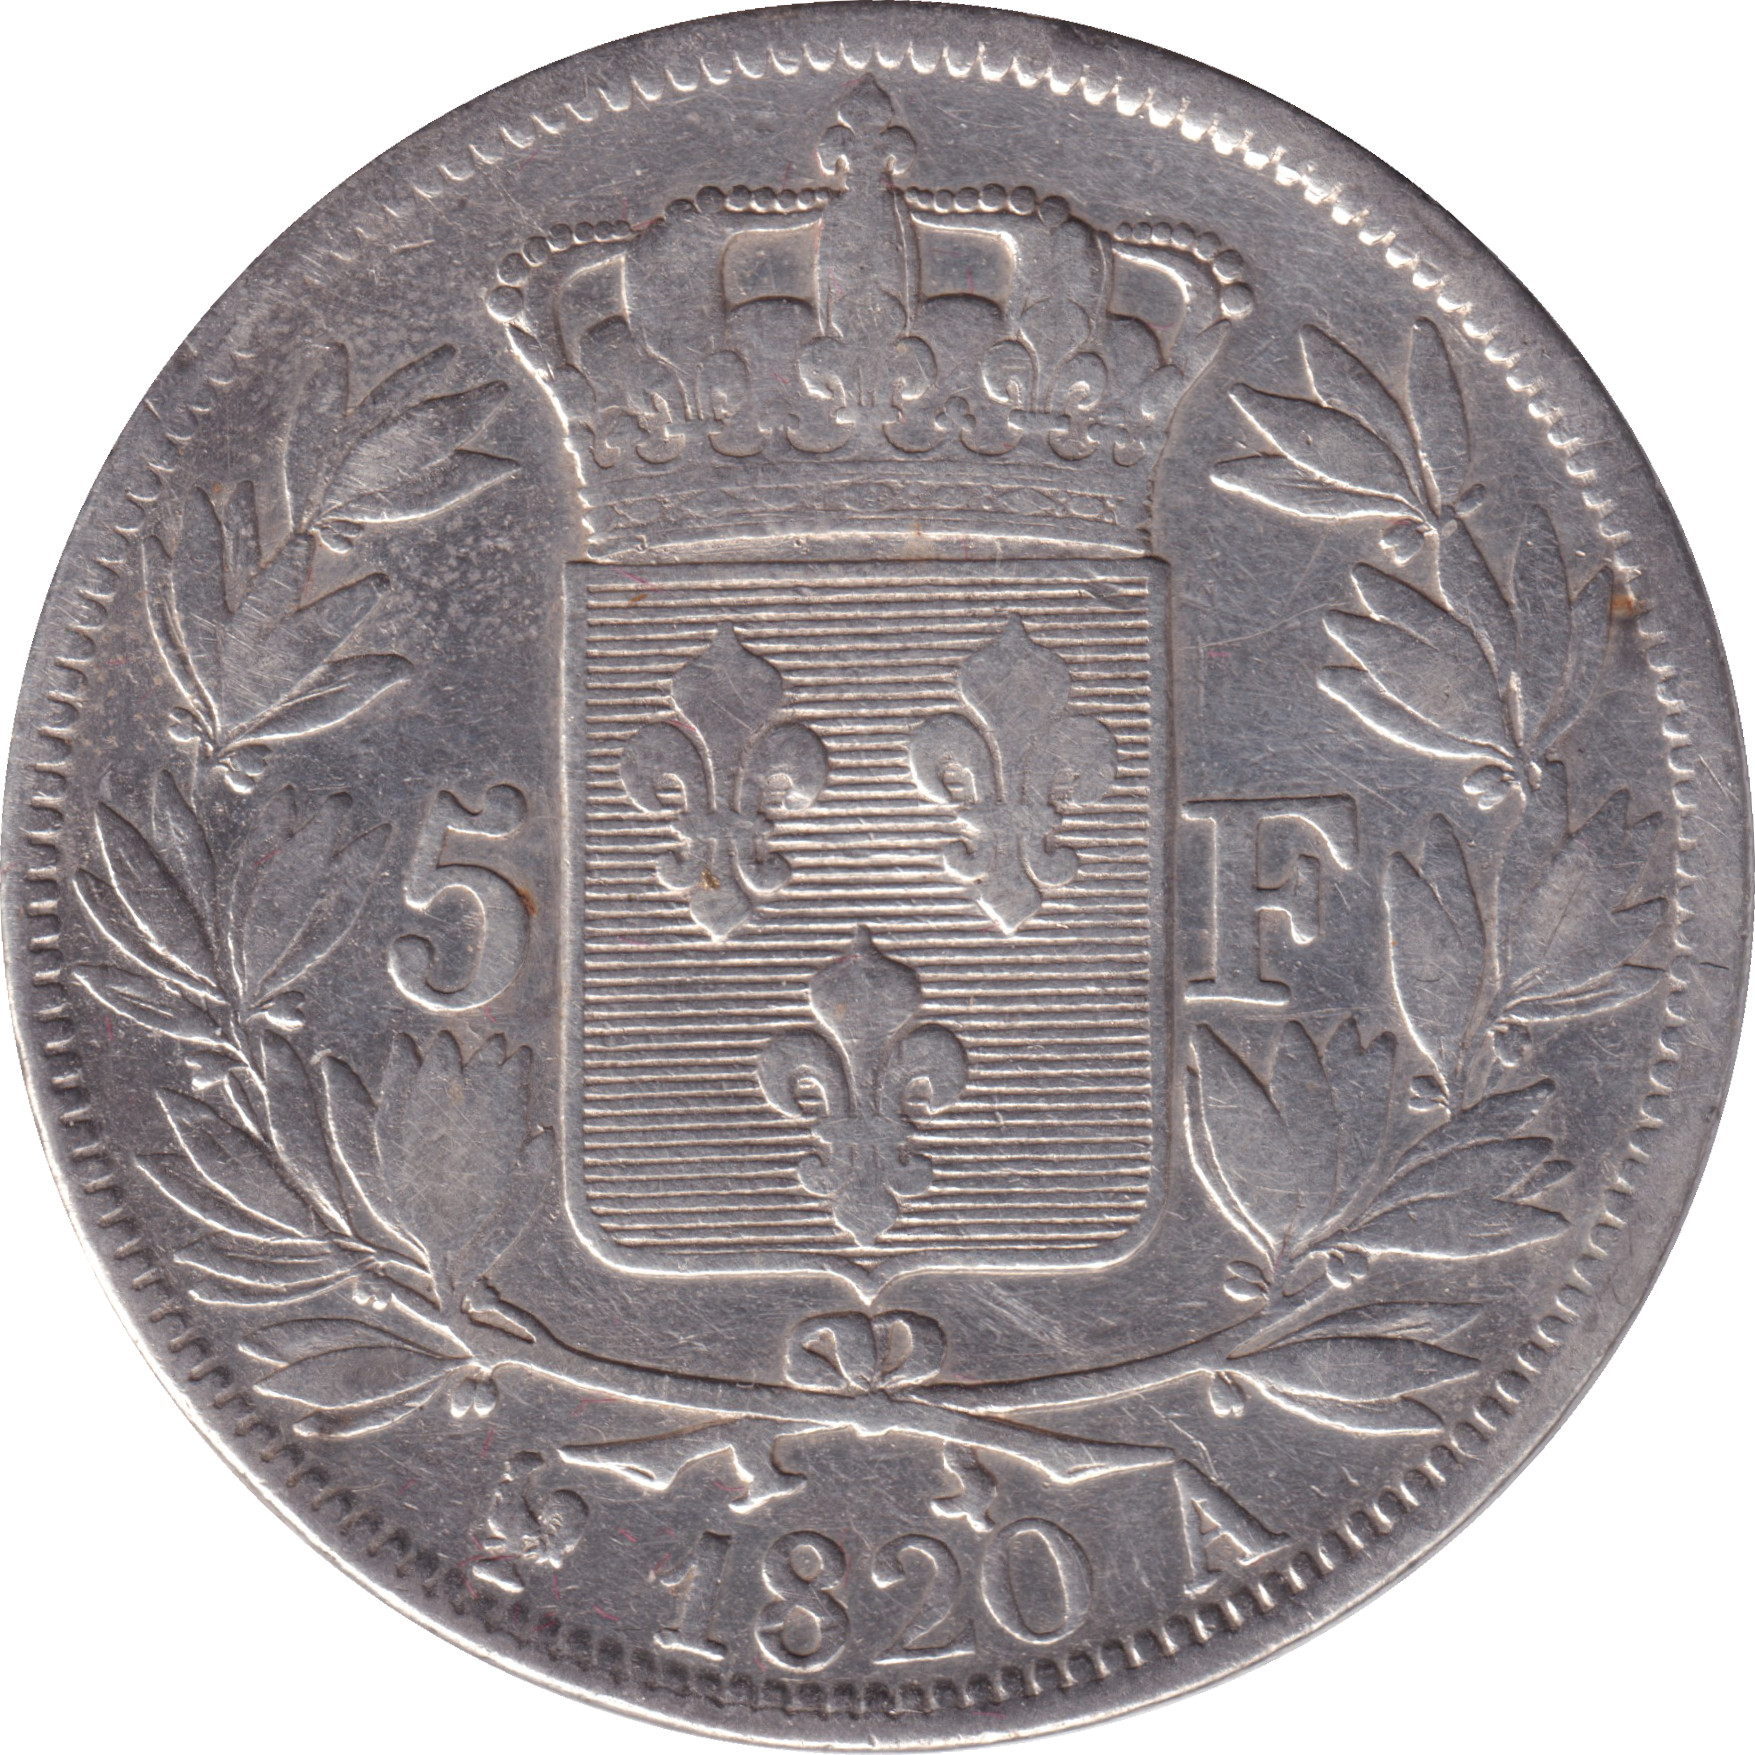 5 francs - Louis XVIII - Bare head